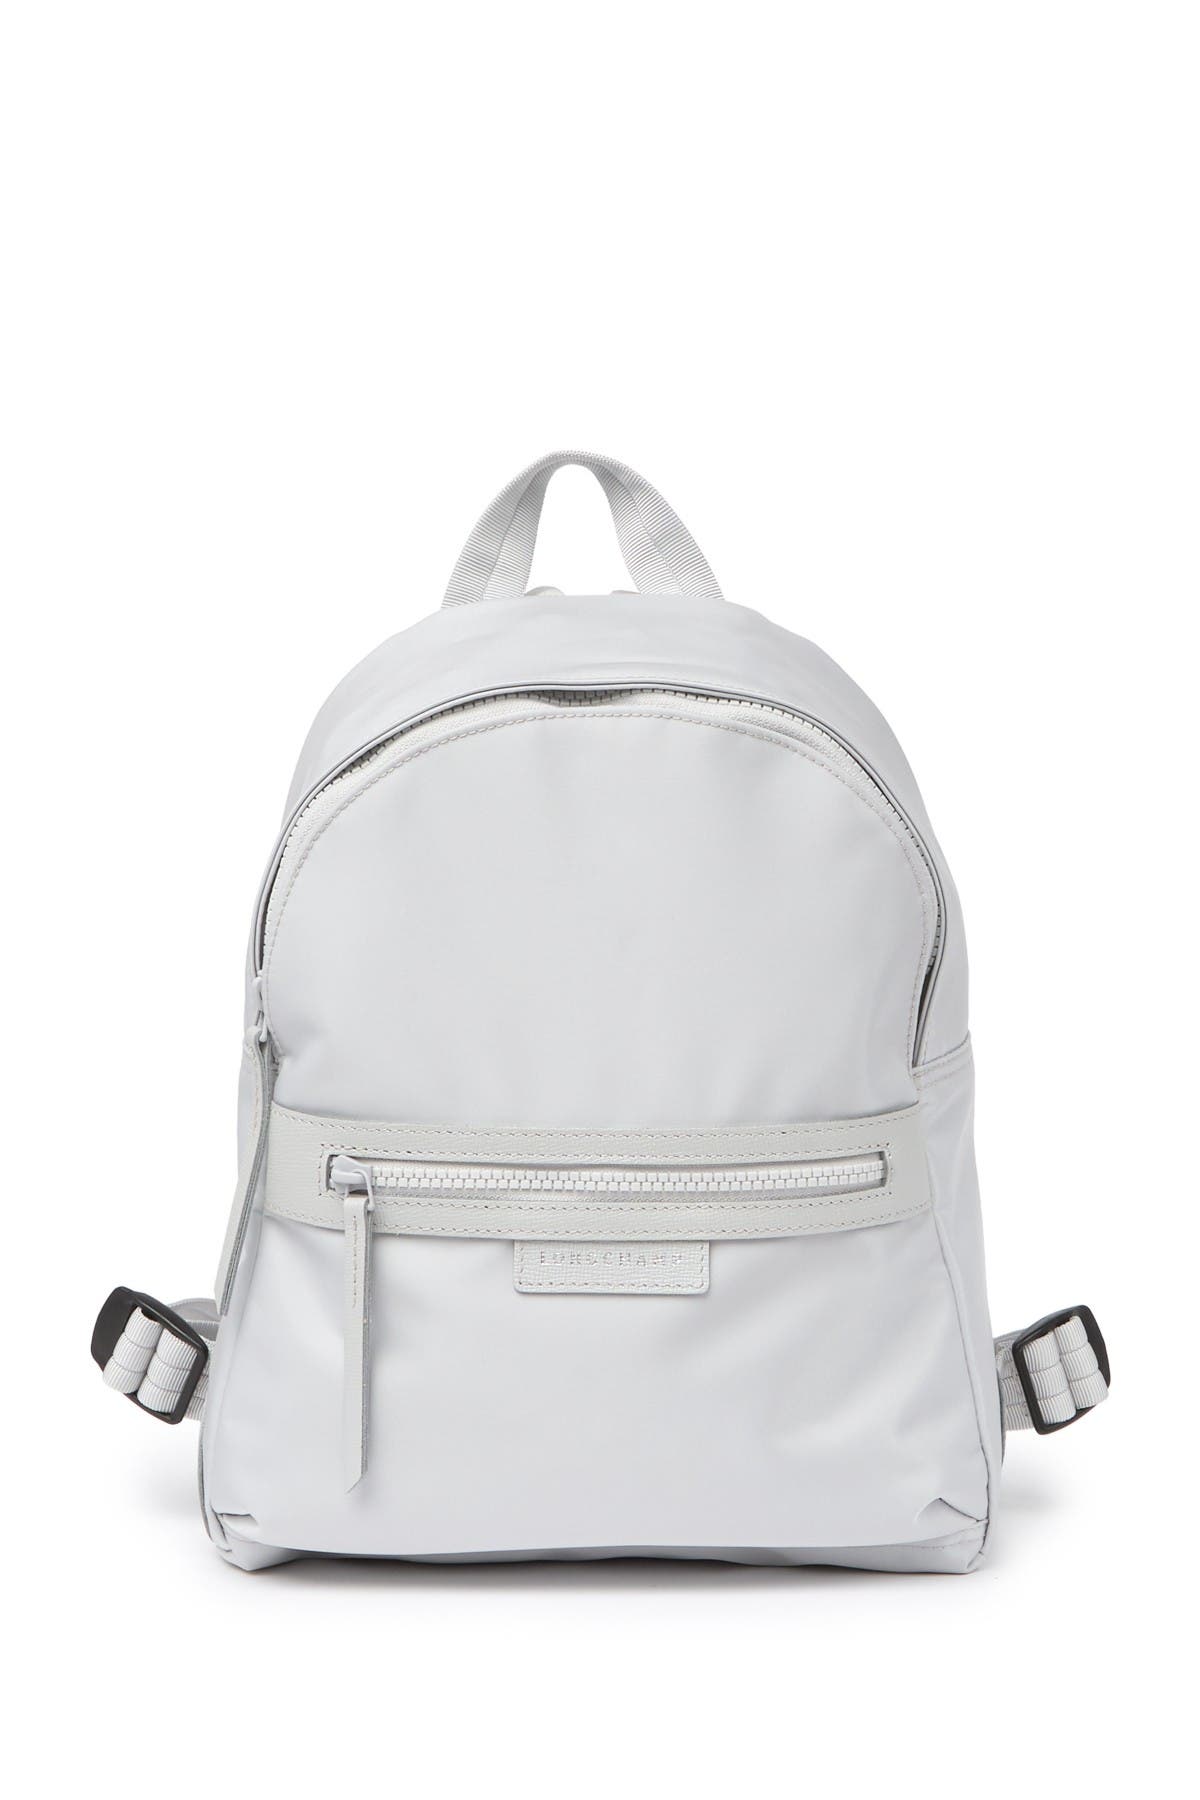 longchamp le pliage neo backpack small